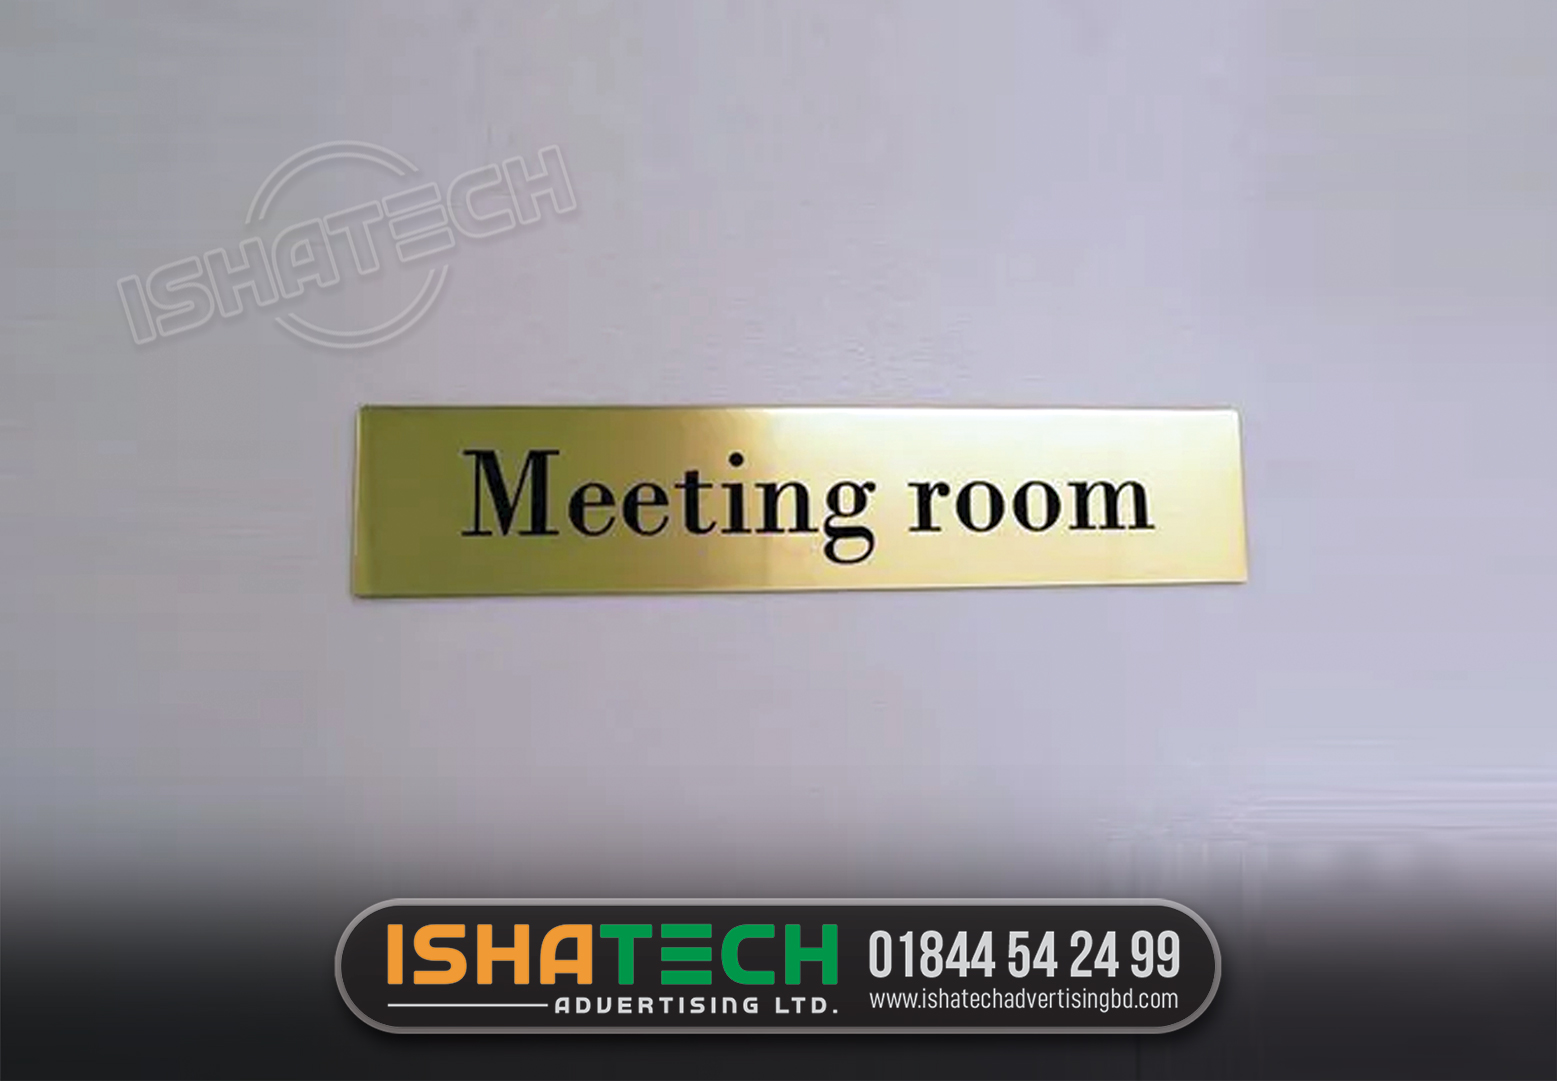 Meeting Room Name Signs | Name Plate Shop bd | Name Plater Dokan in Dhaka Bangladesh